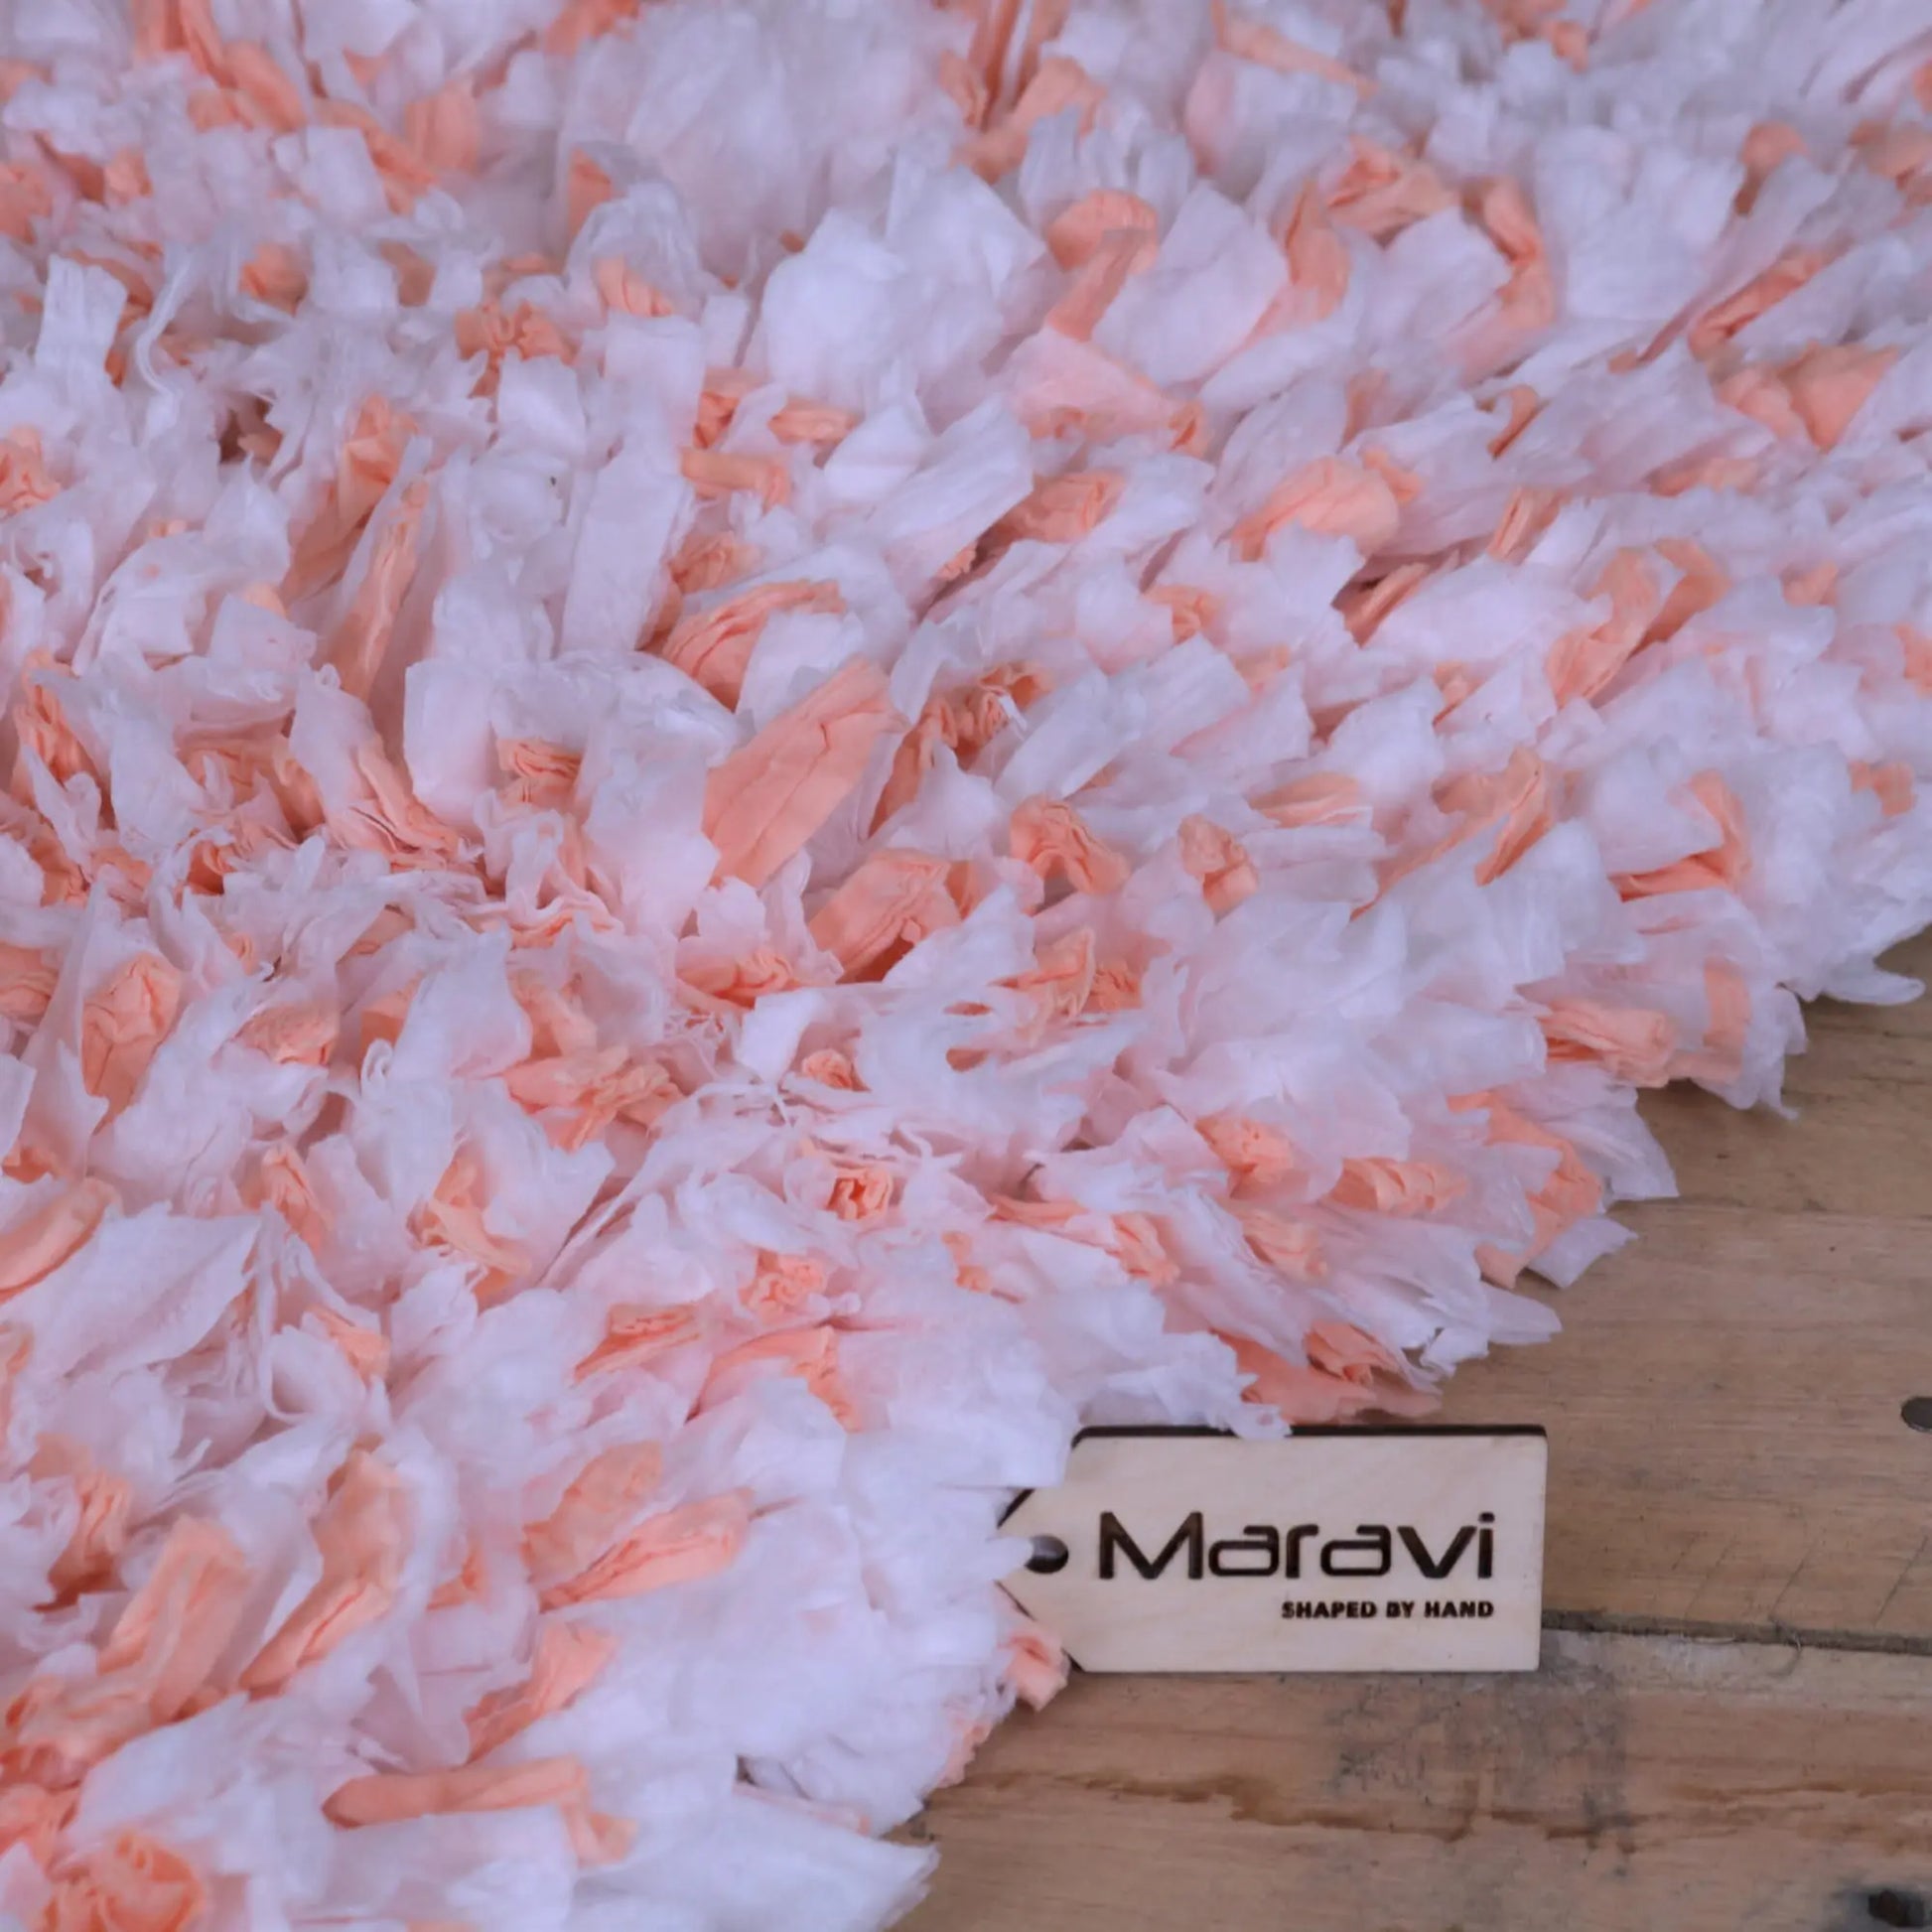 Varam Fluffy Recycled Rug White and Orange - Closeup of Fluffy Bits